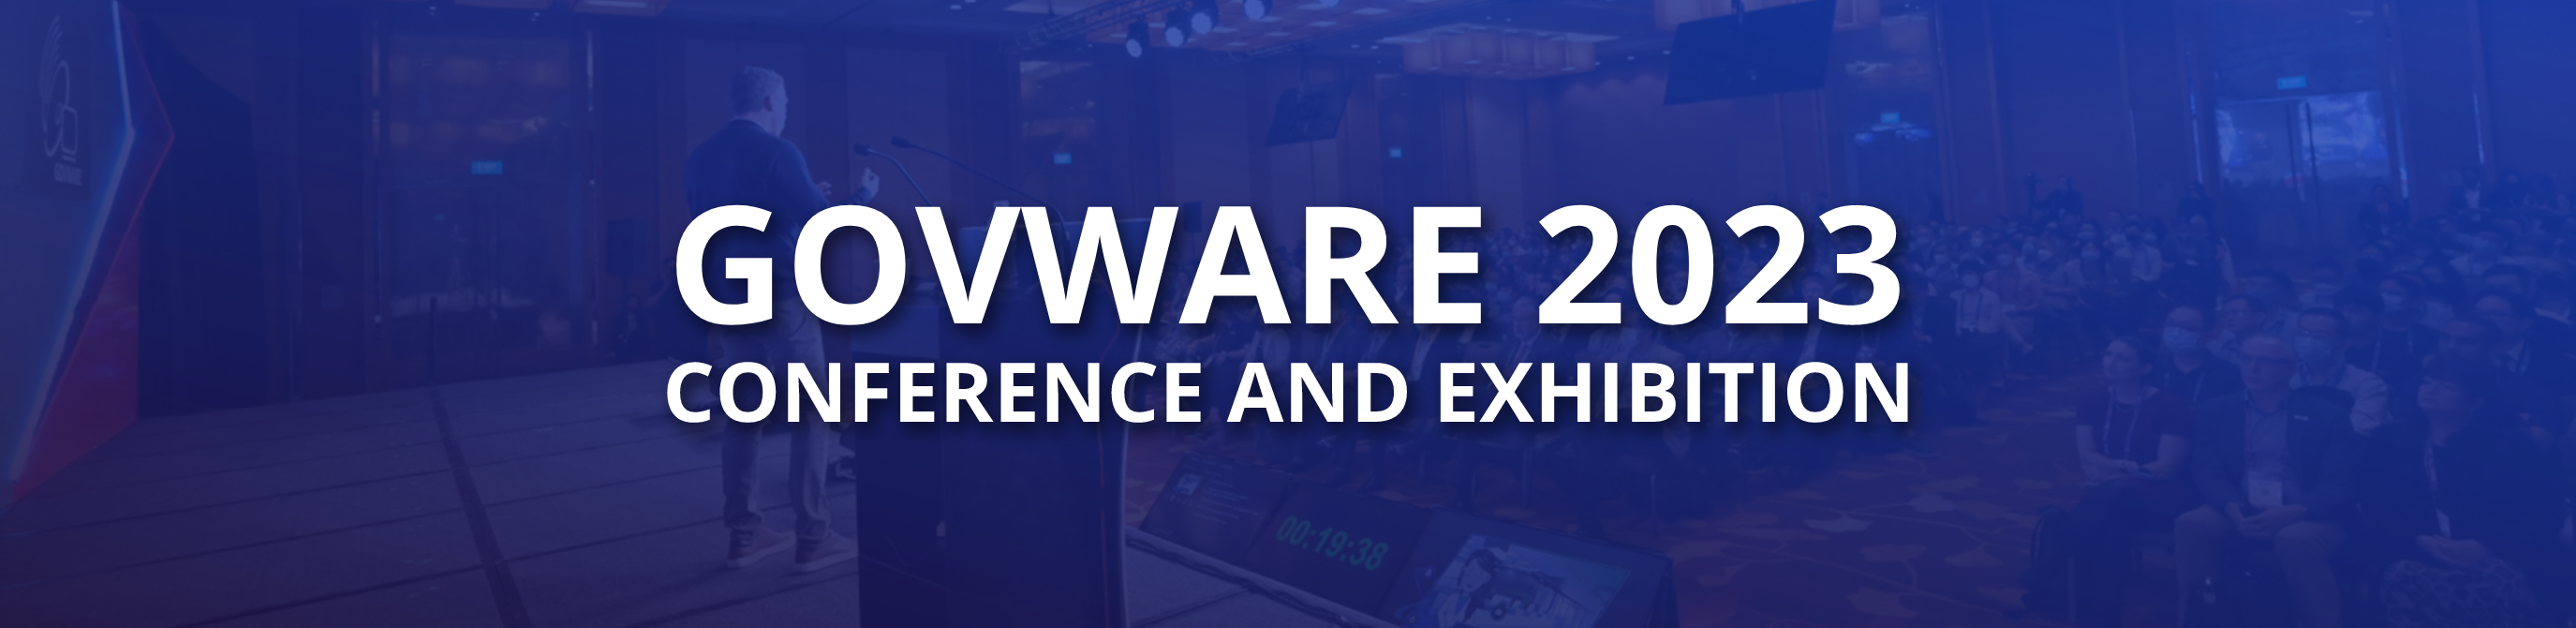 GovWare Conference & Exhibition 2023